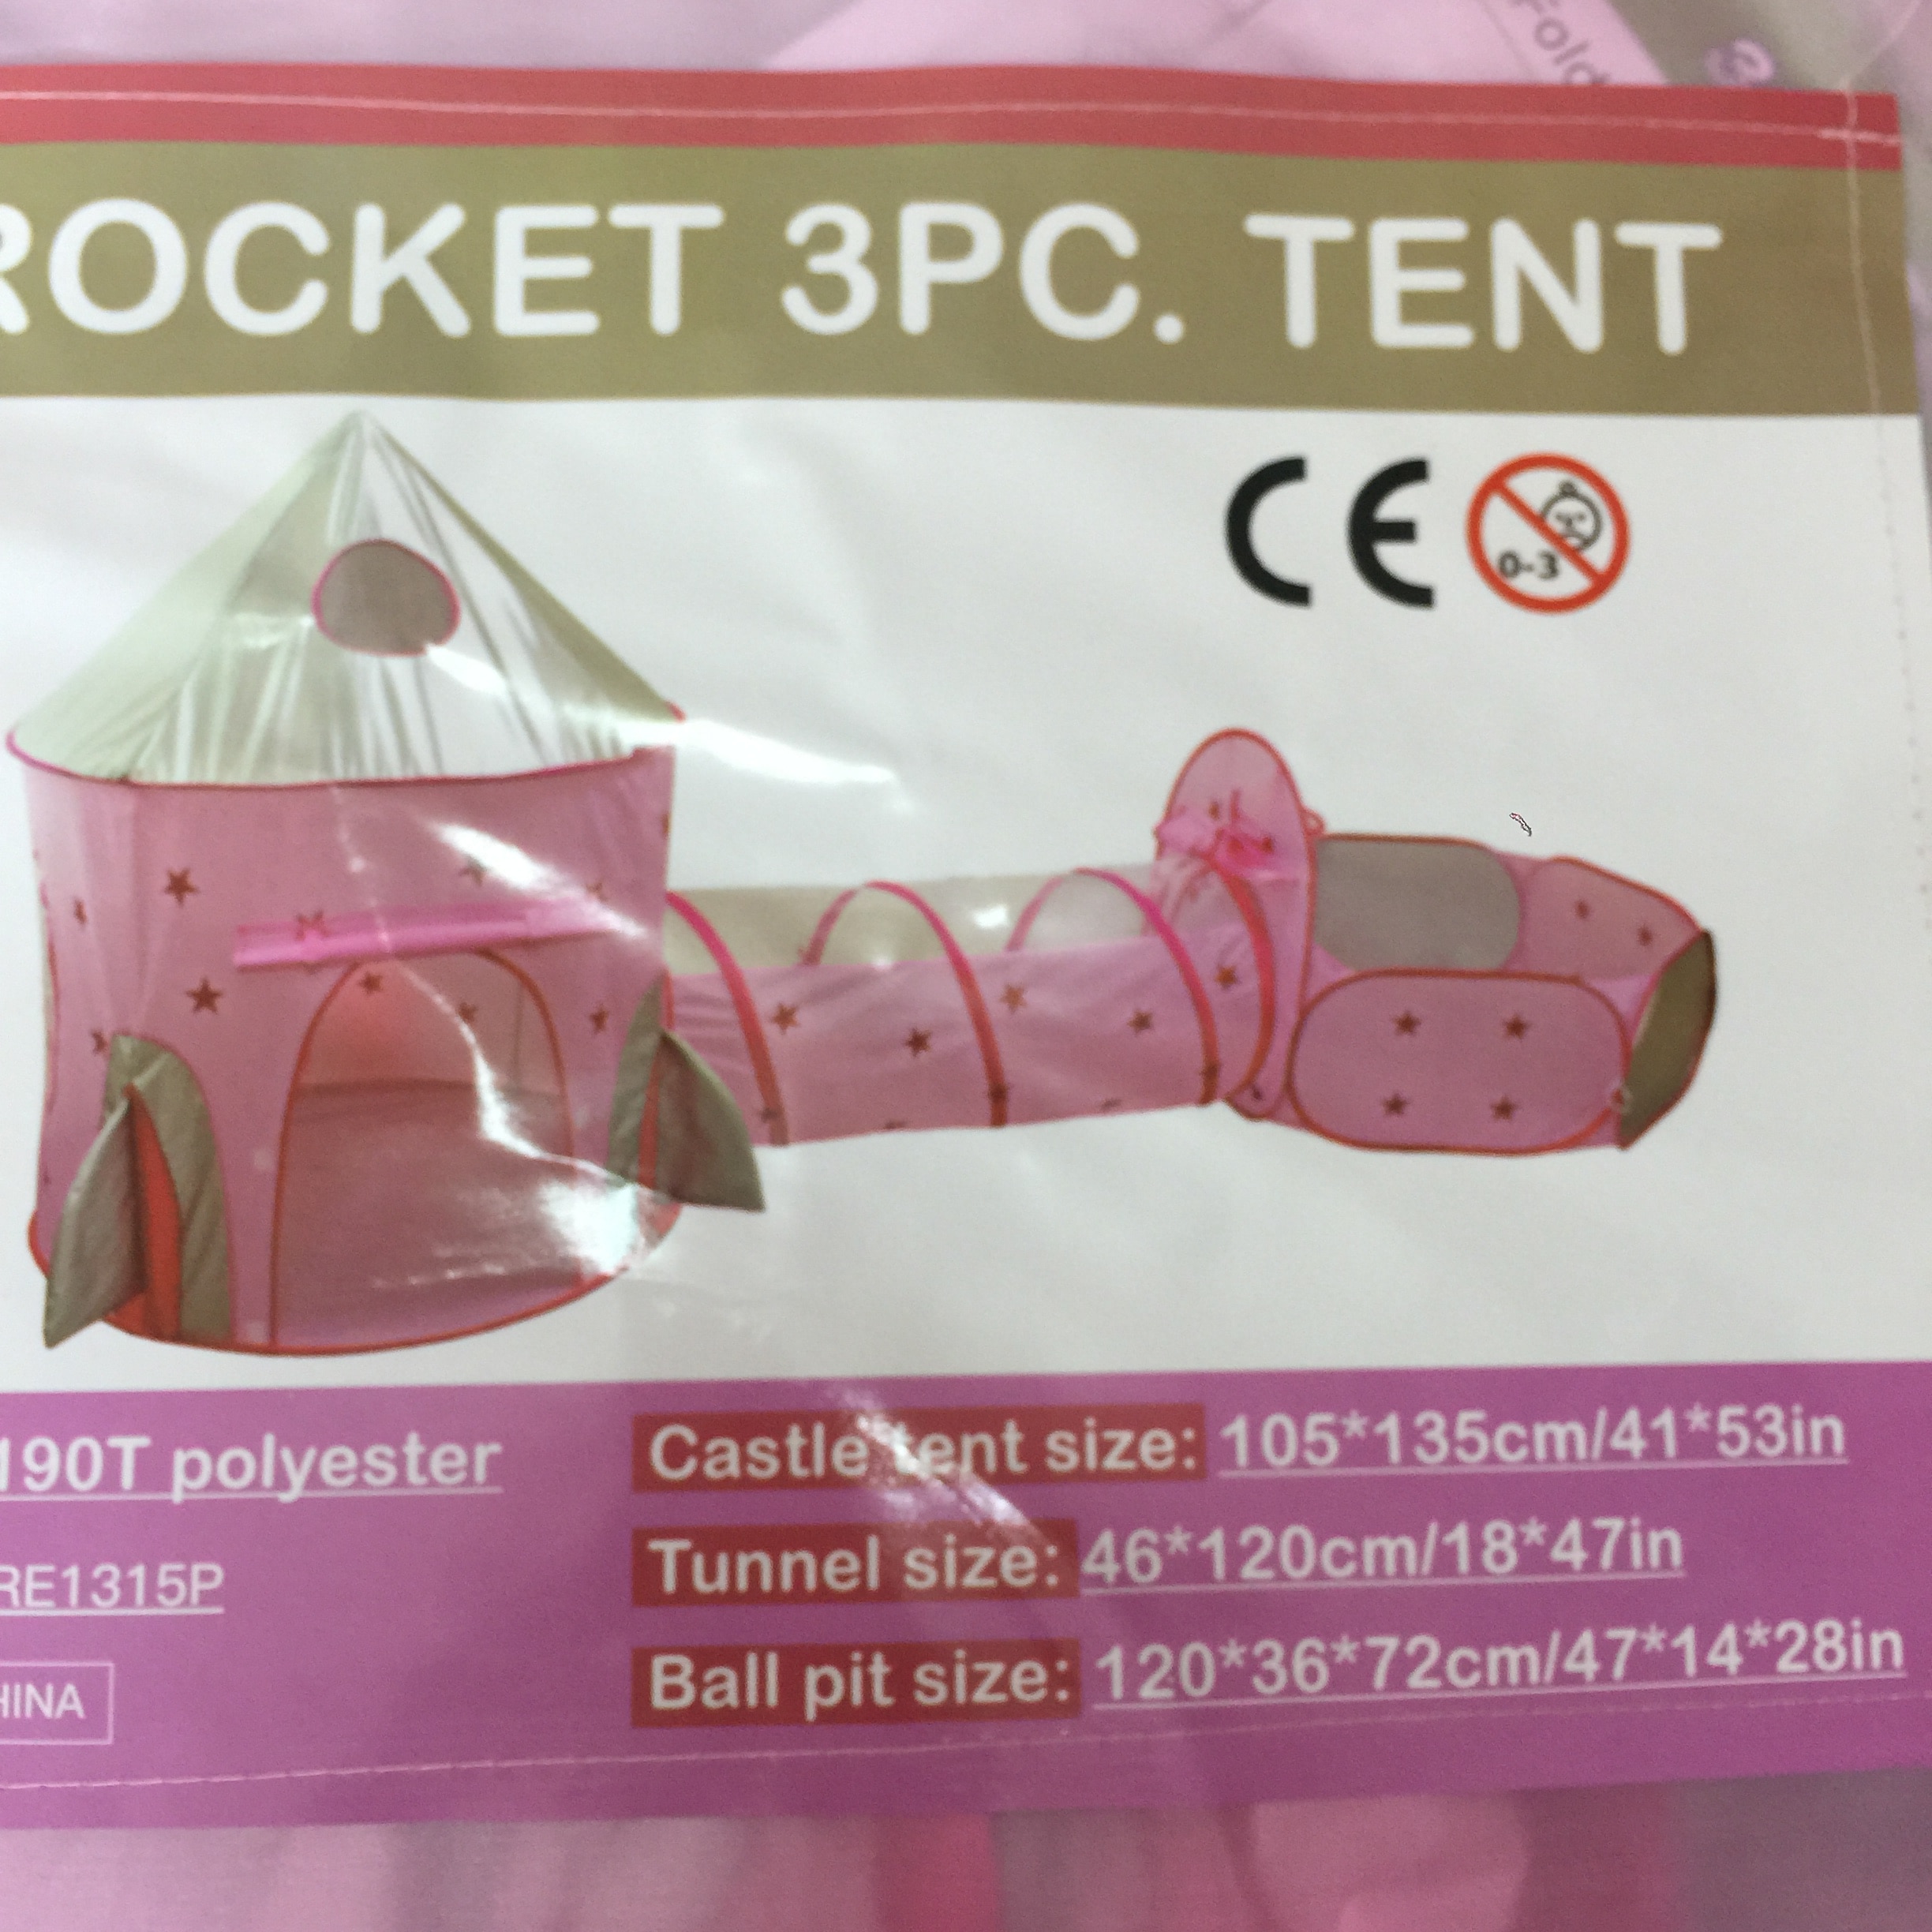 Børns s 3 in 1 telt rumskib telt plads yurt telt spil lyserødt hus raket skib lege telt bold pool til pige